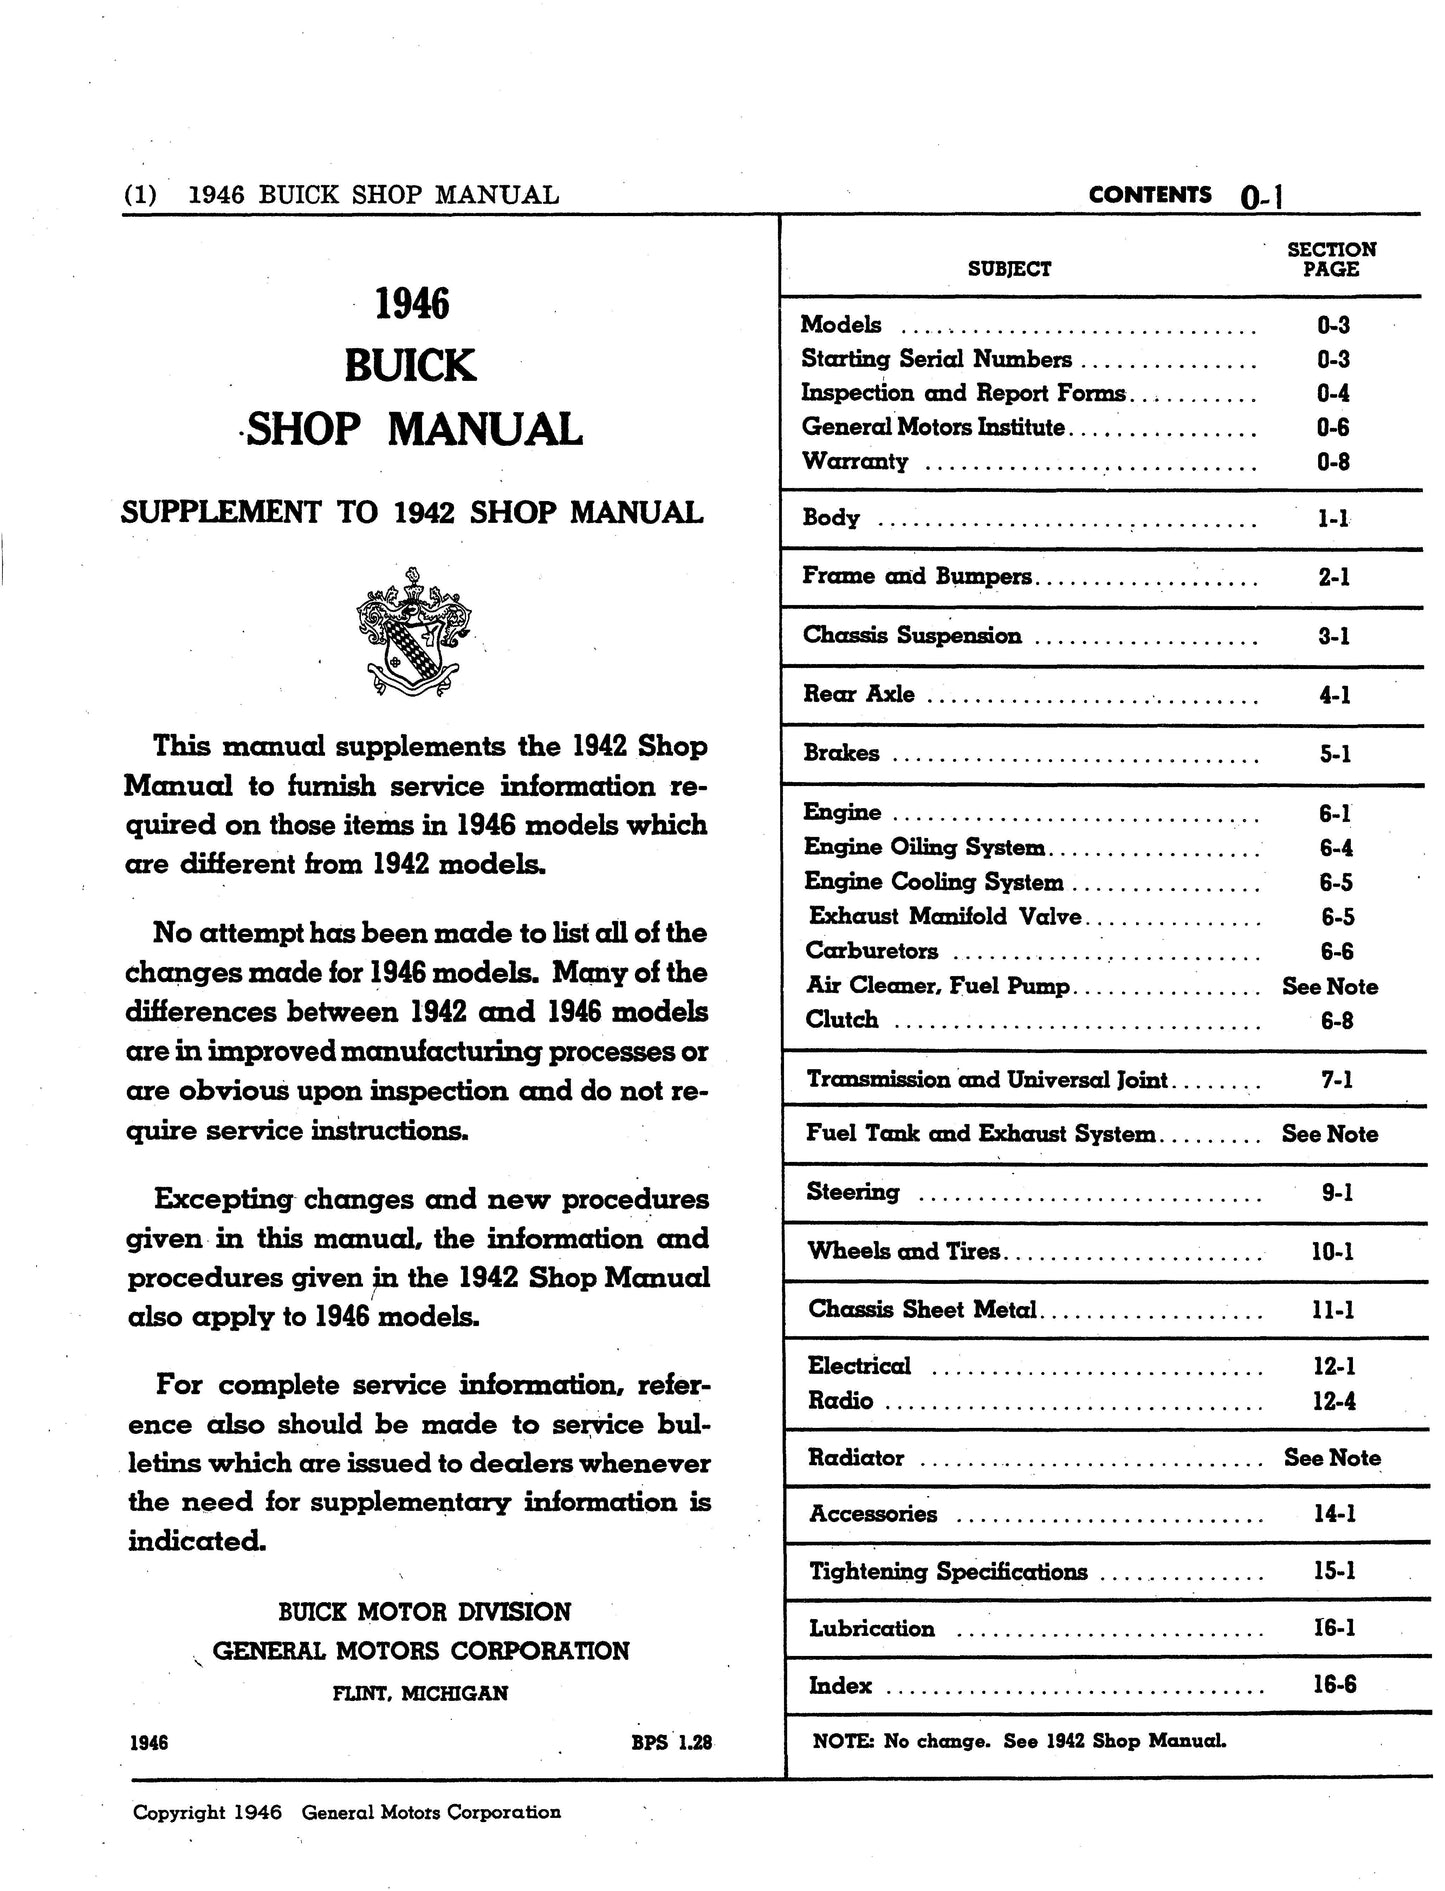 1942- 1946, 1947 Buick Repair Manual - All Models